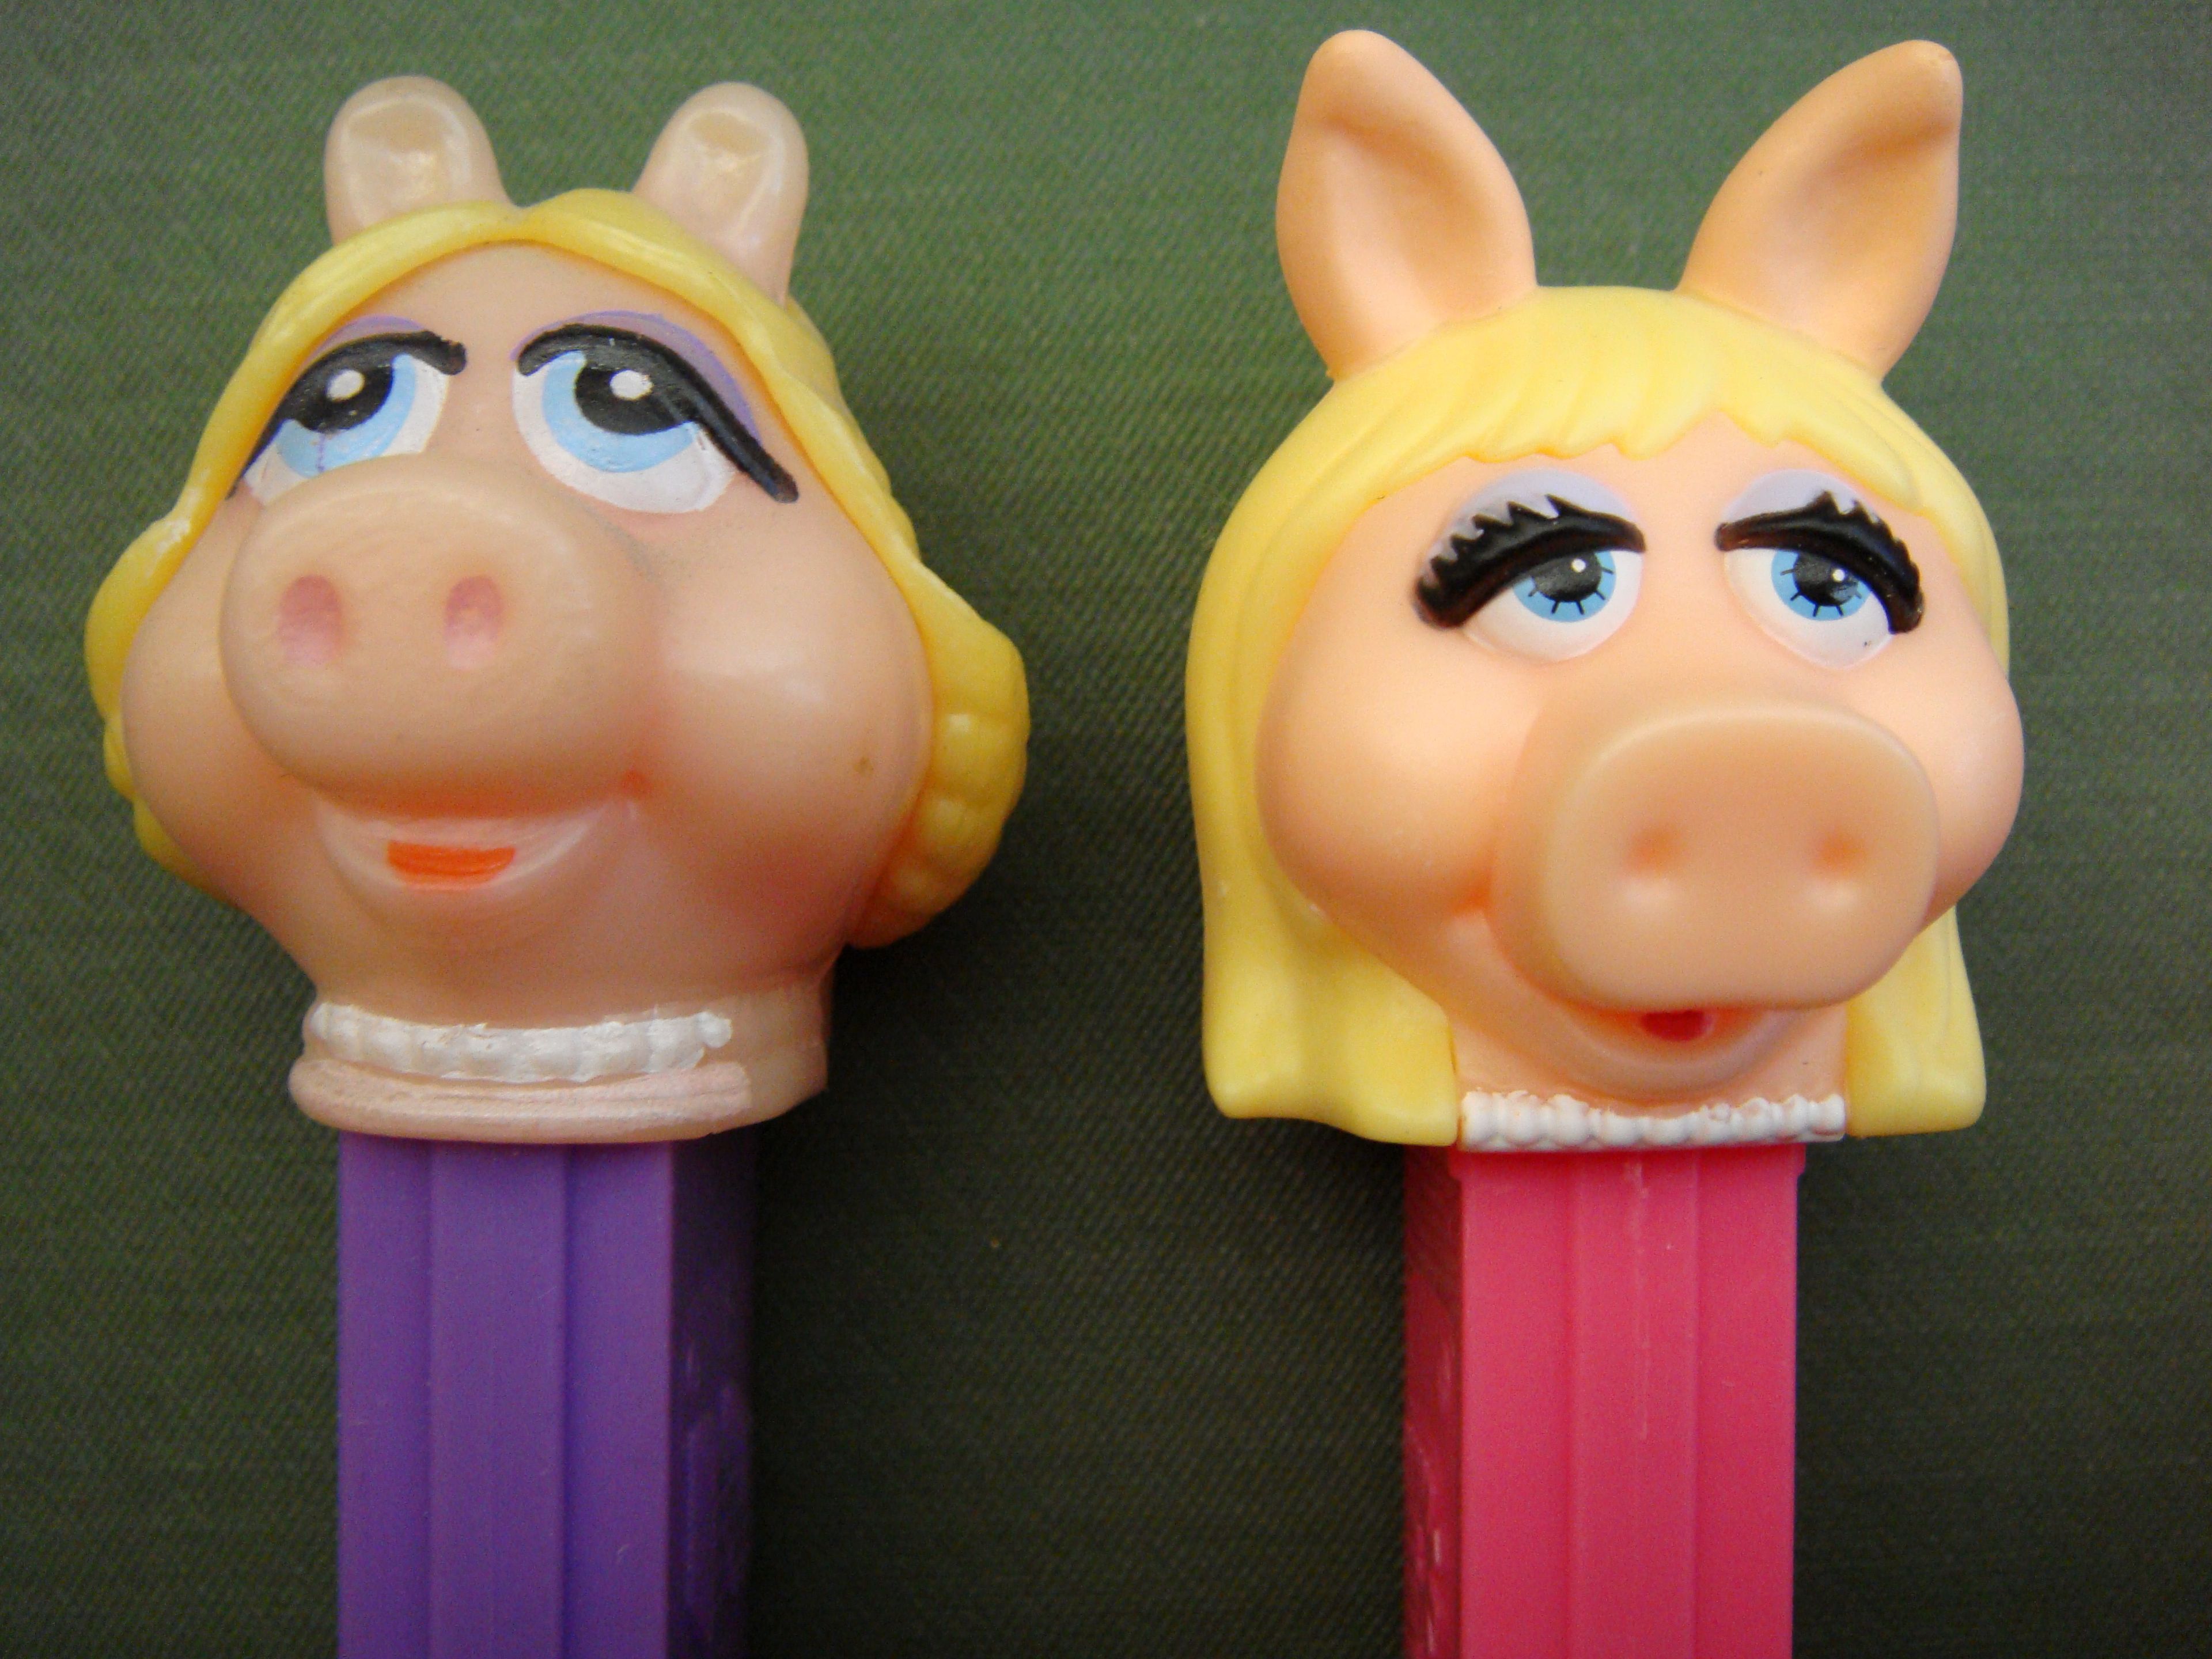 A la izquierda, dispensador PEZ de Ms. Piggy 1991; a la derecha, dispensador PEZ de Ms. Piggy 2012.